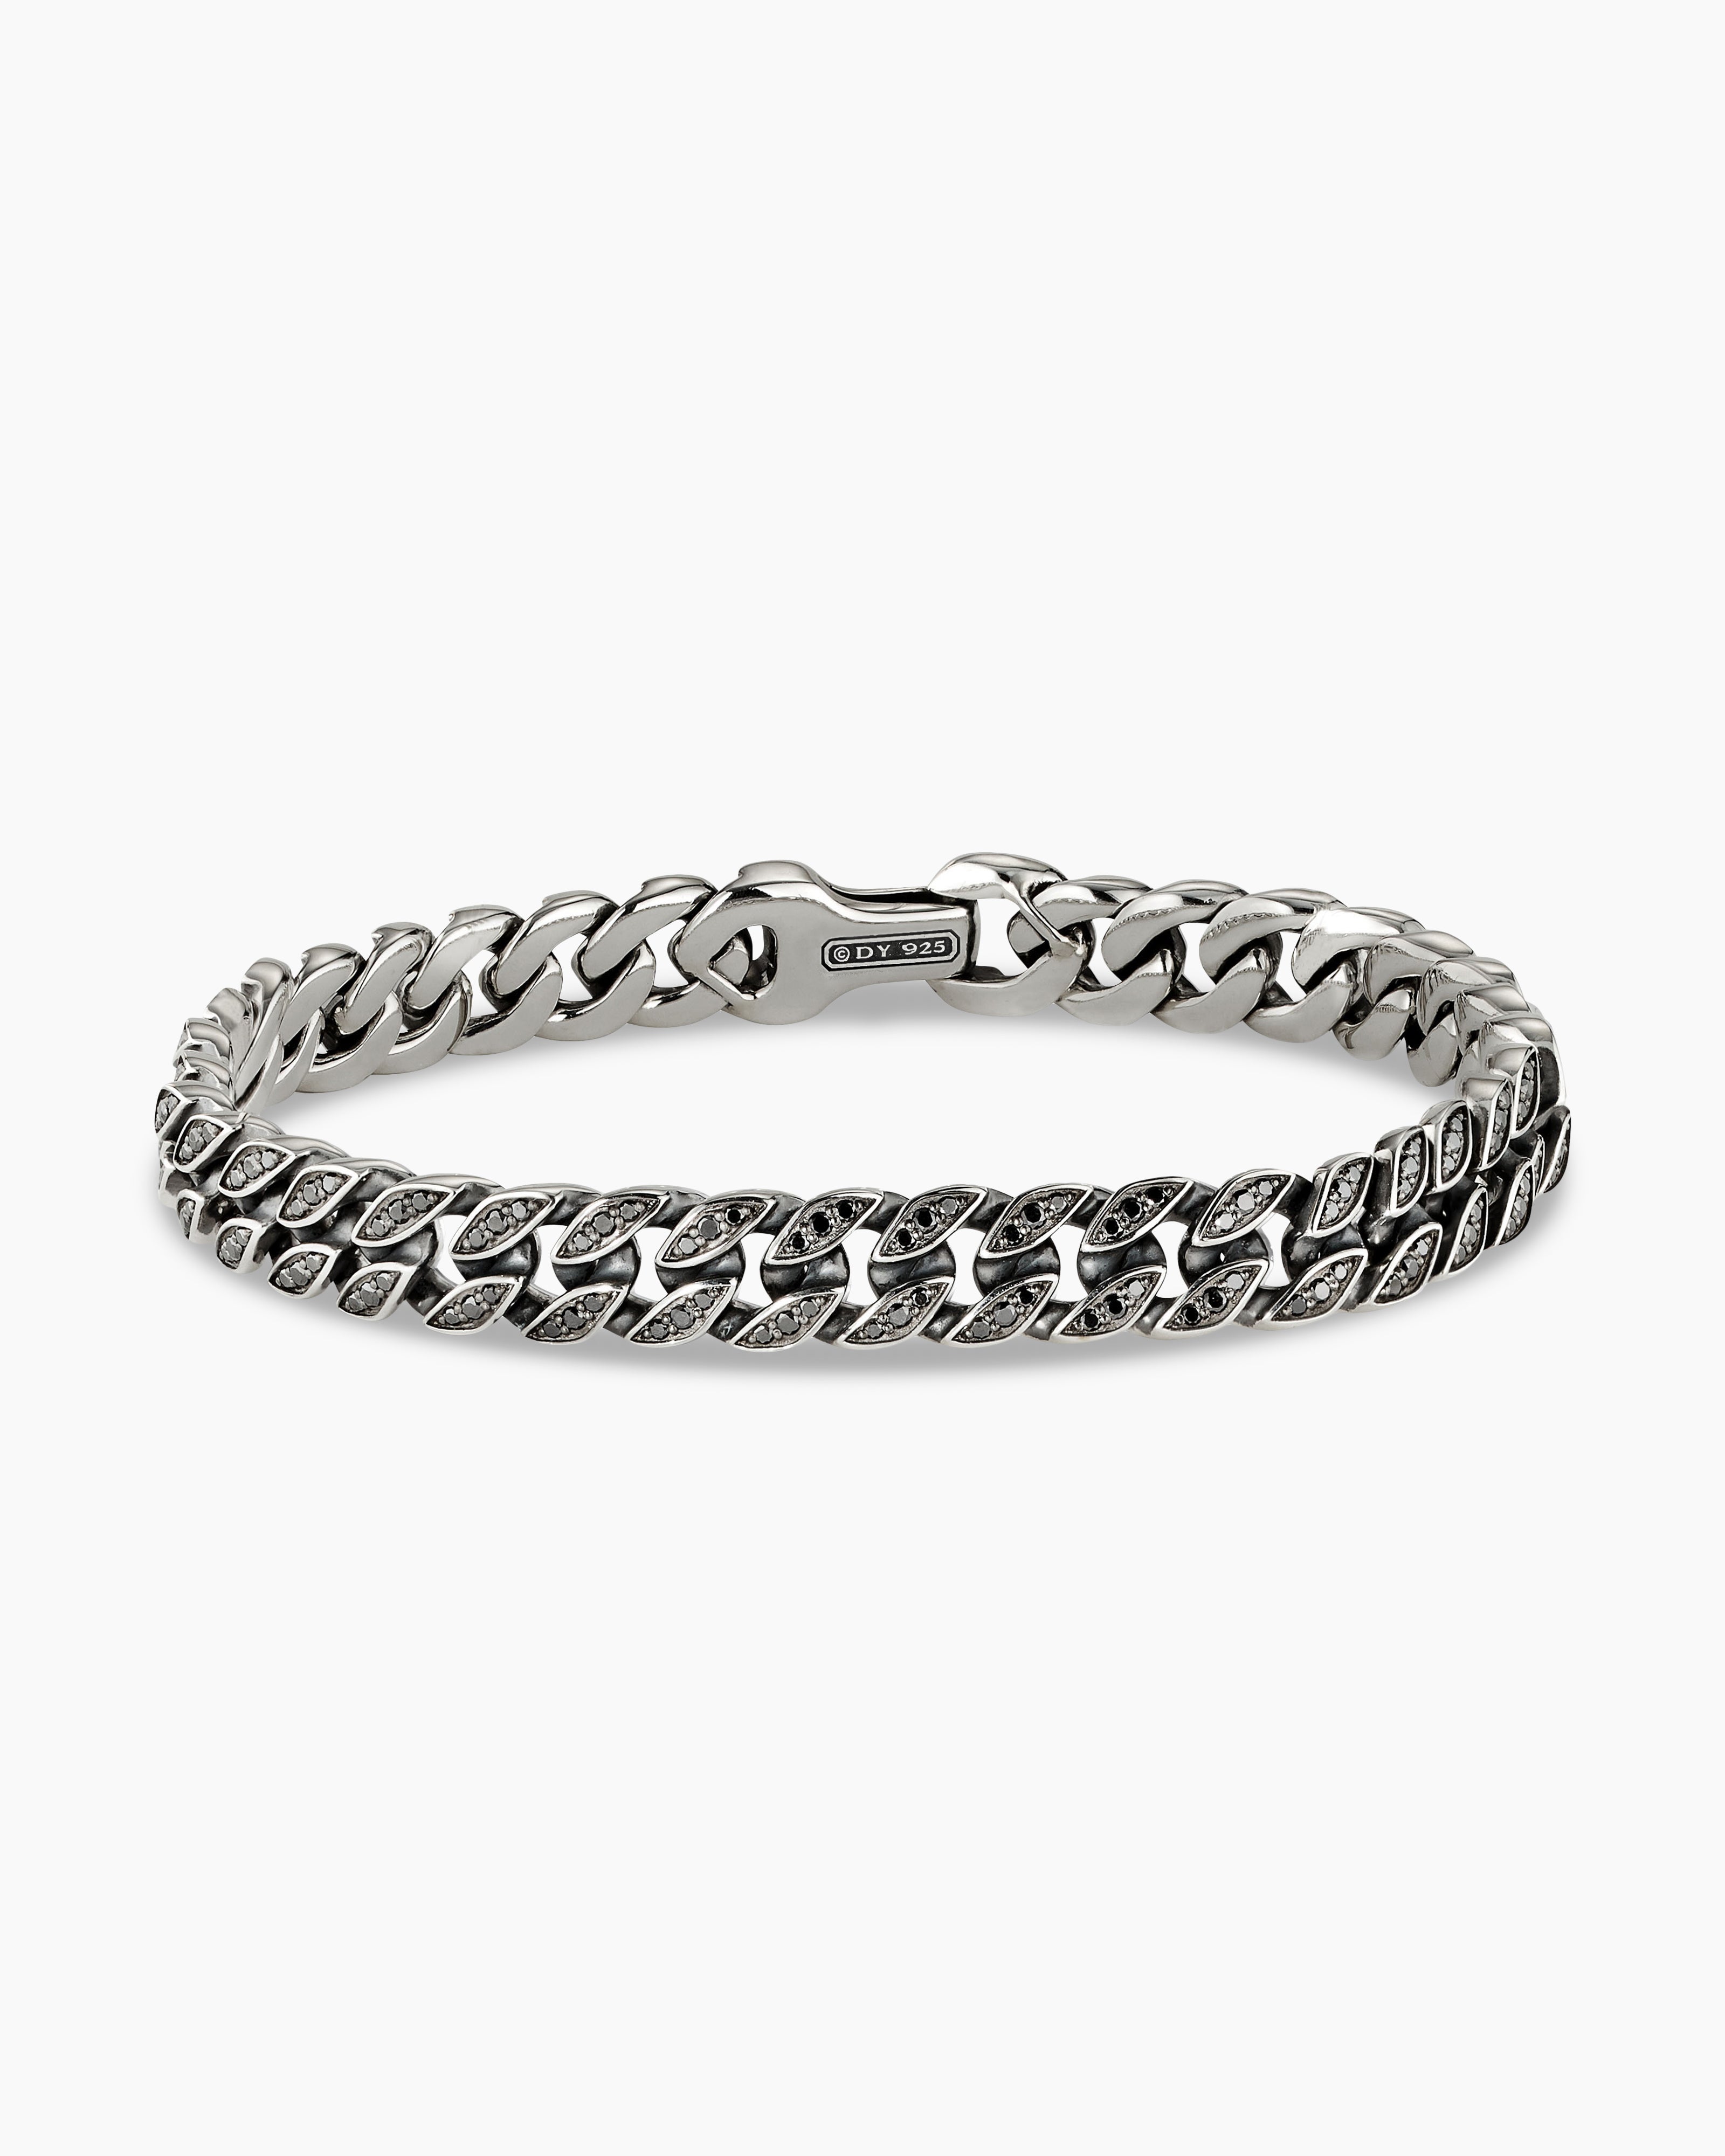 Men's Sterling Silver Plain Curb Chain Bracelet - Jewelry1000.com